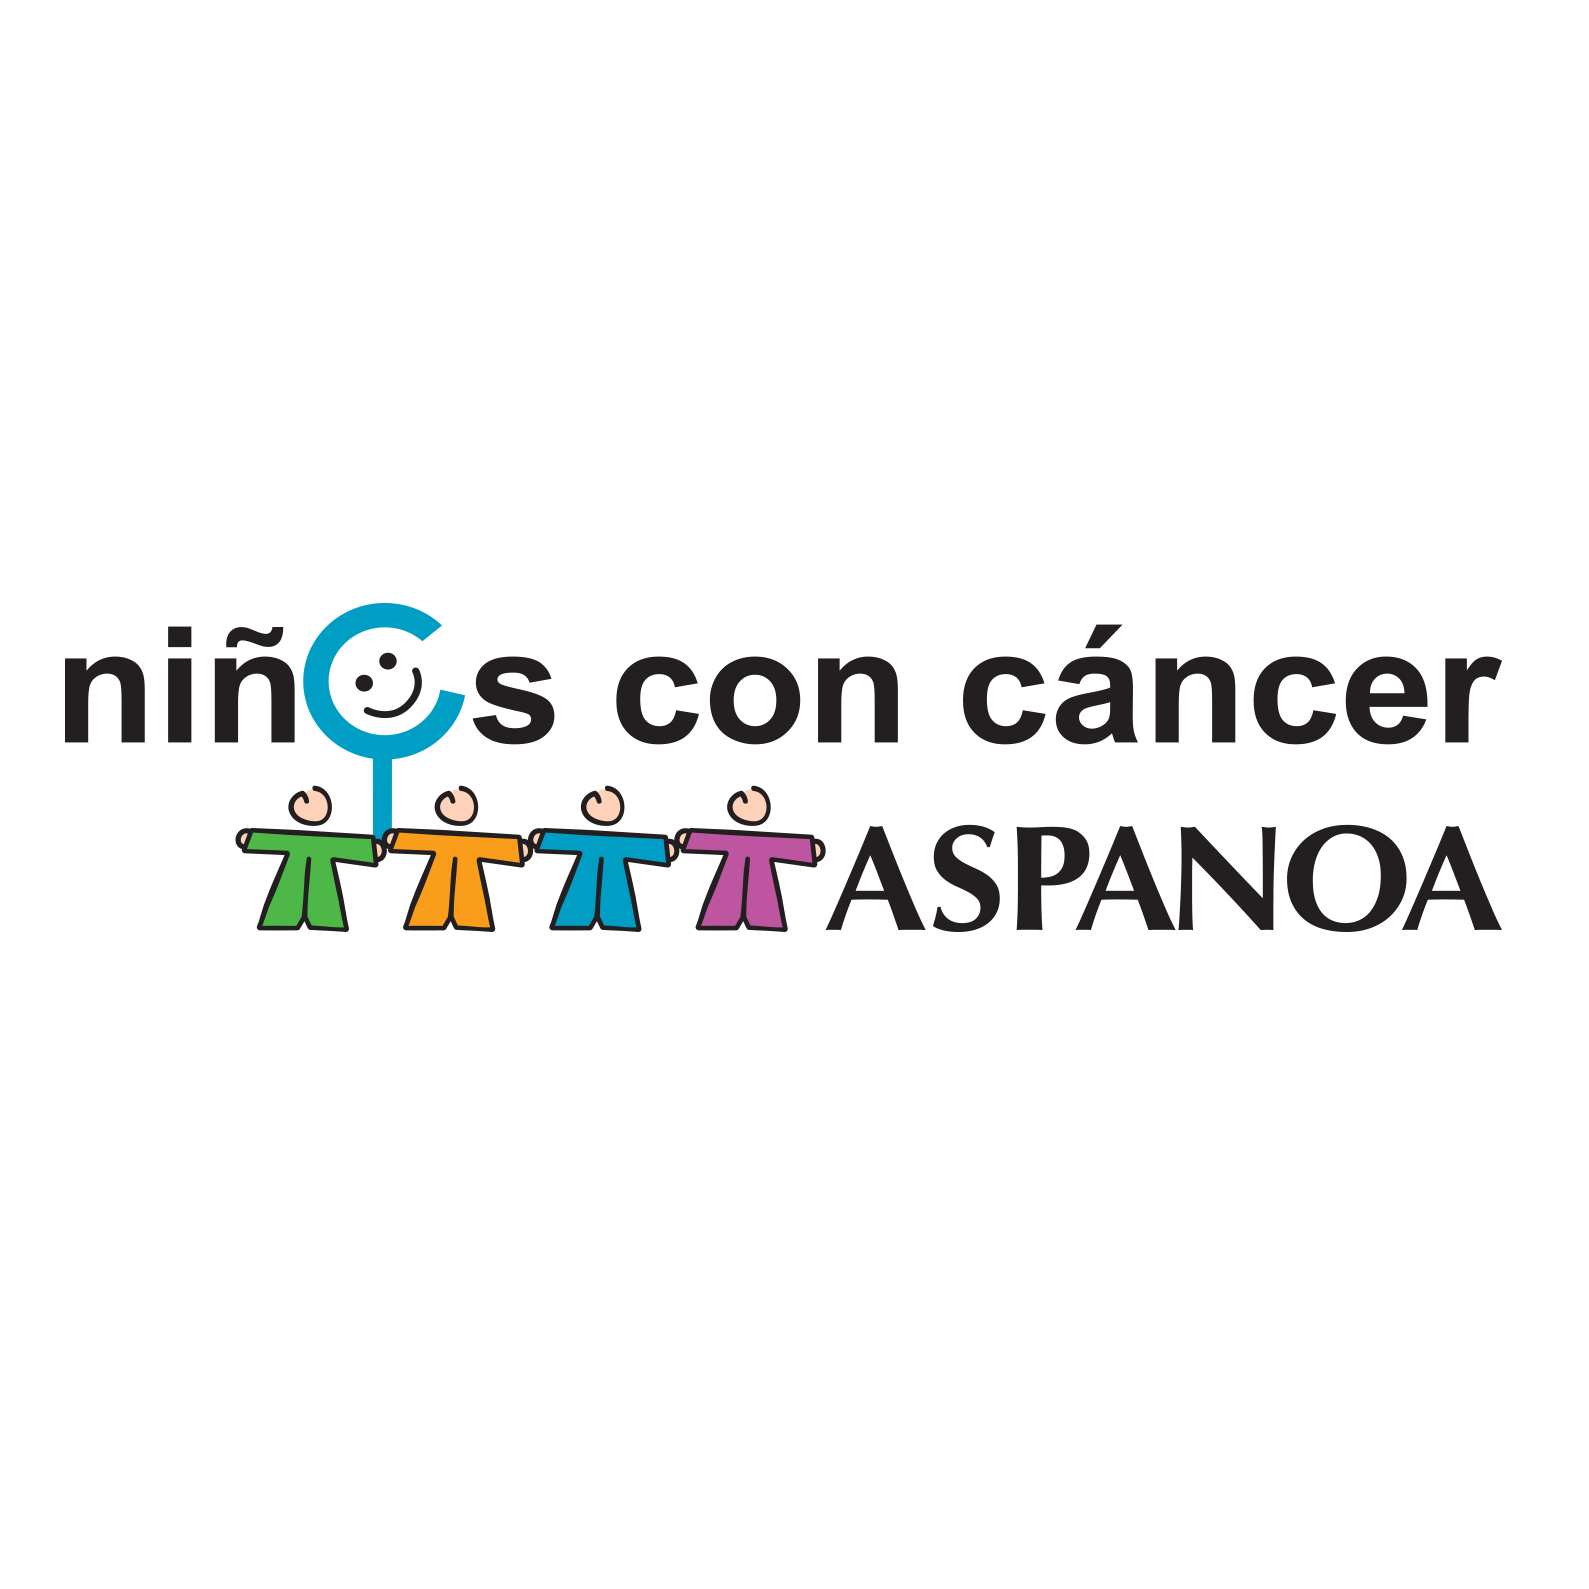 ASPANOA - Asociación de padres de niños con cáncer de Aragón - El teu perfil. Vota, valora i comunica’t